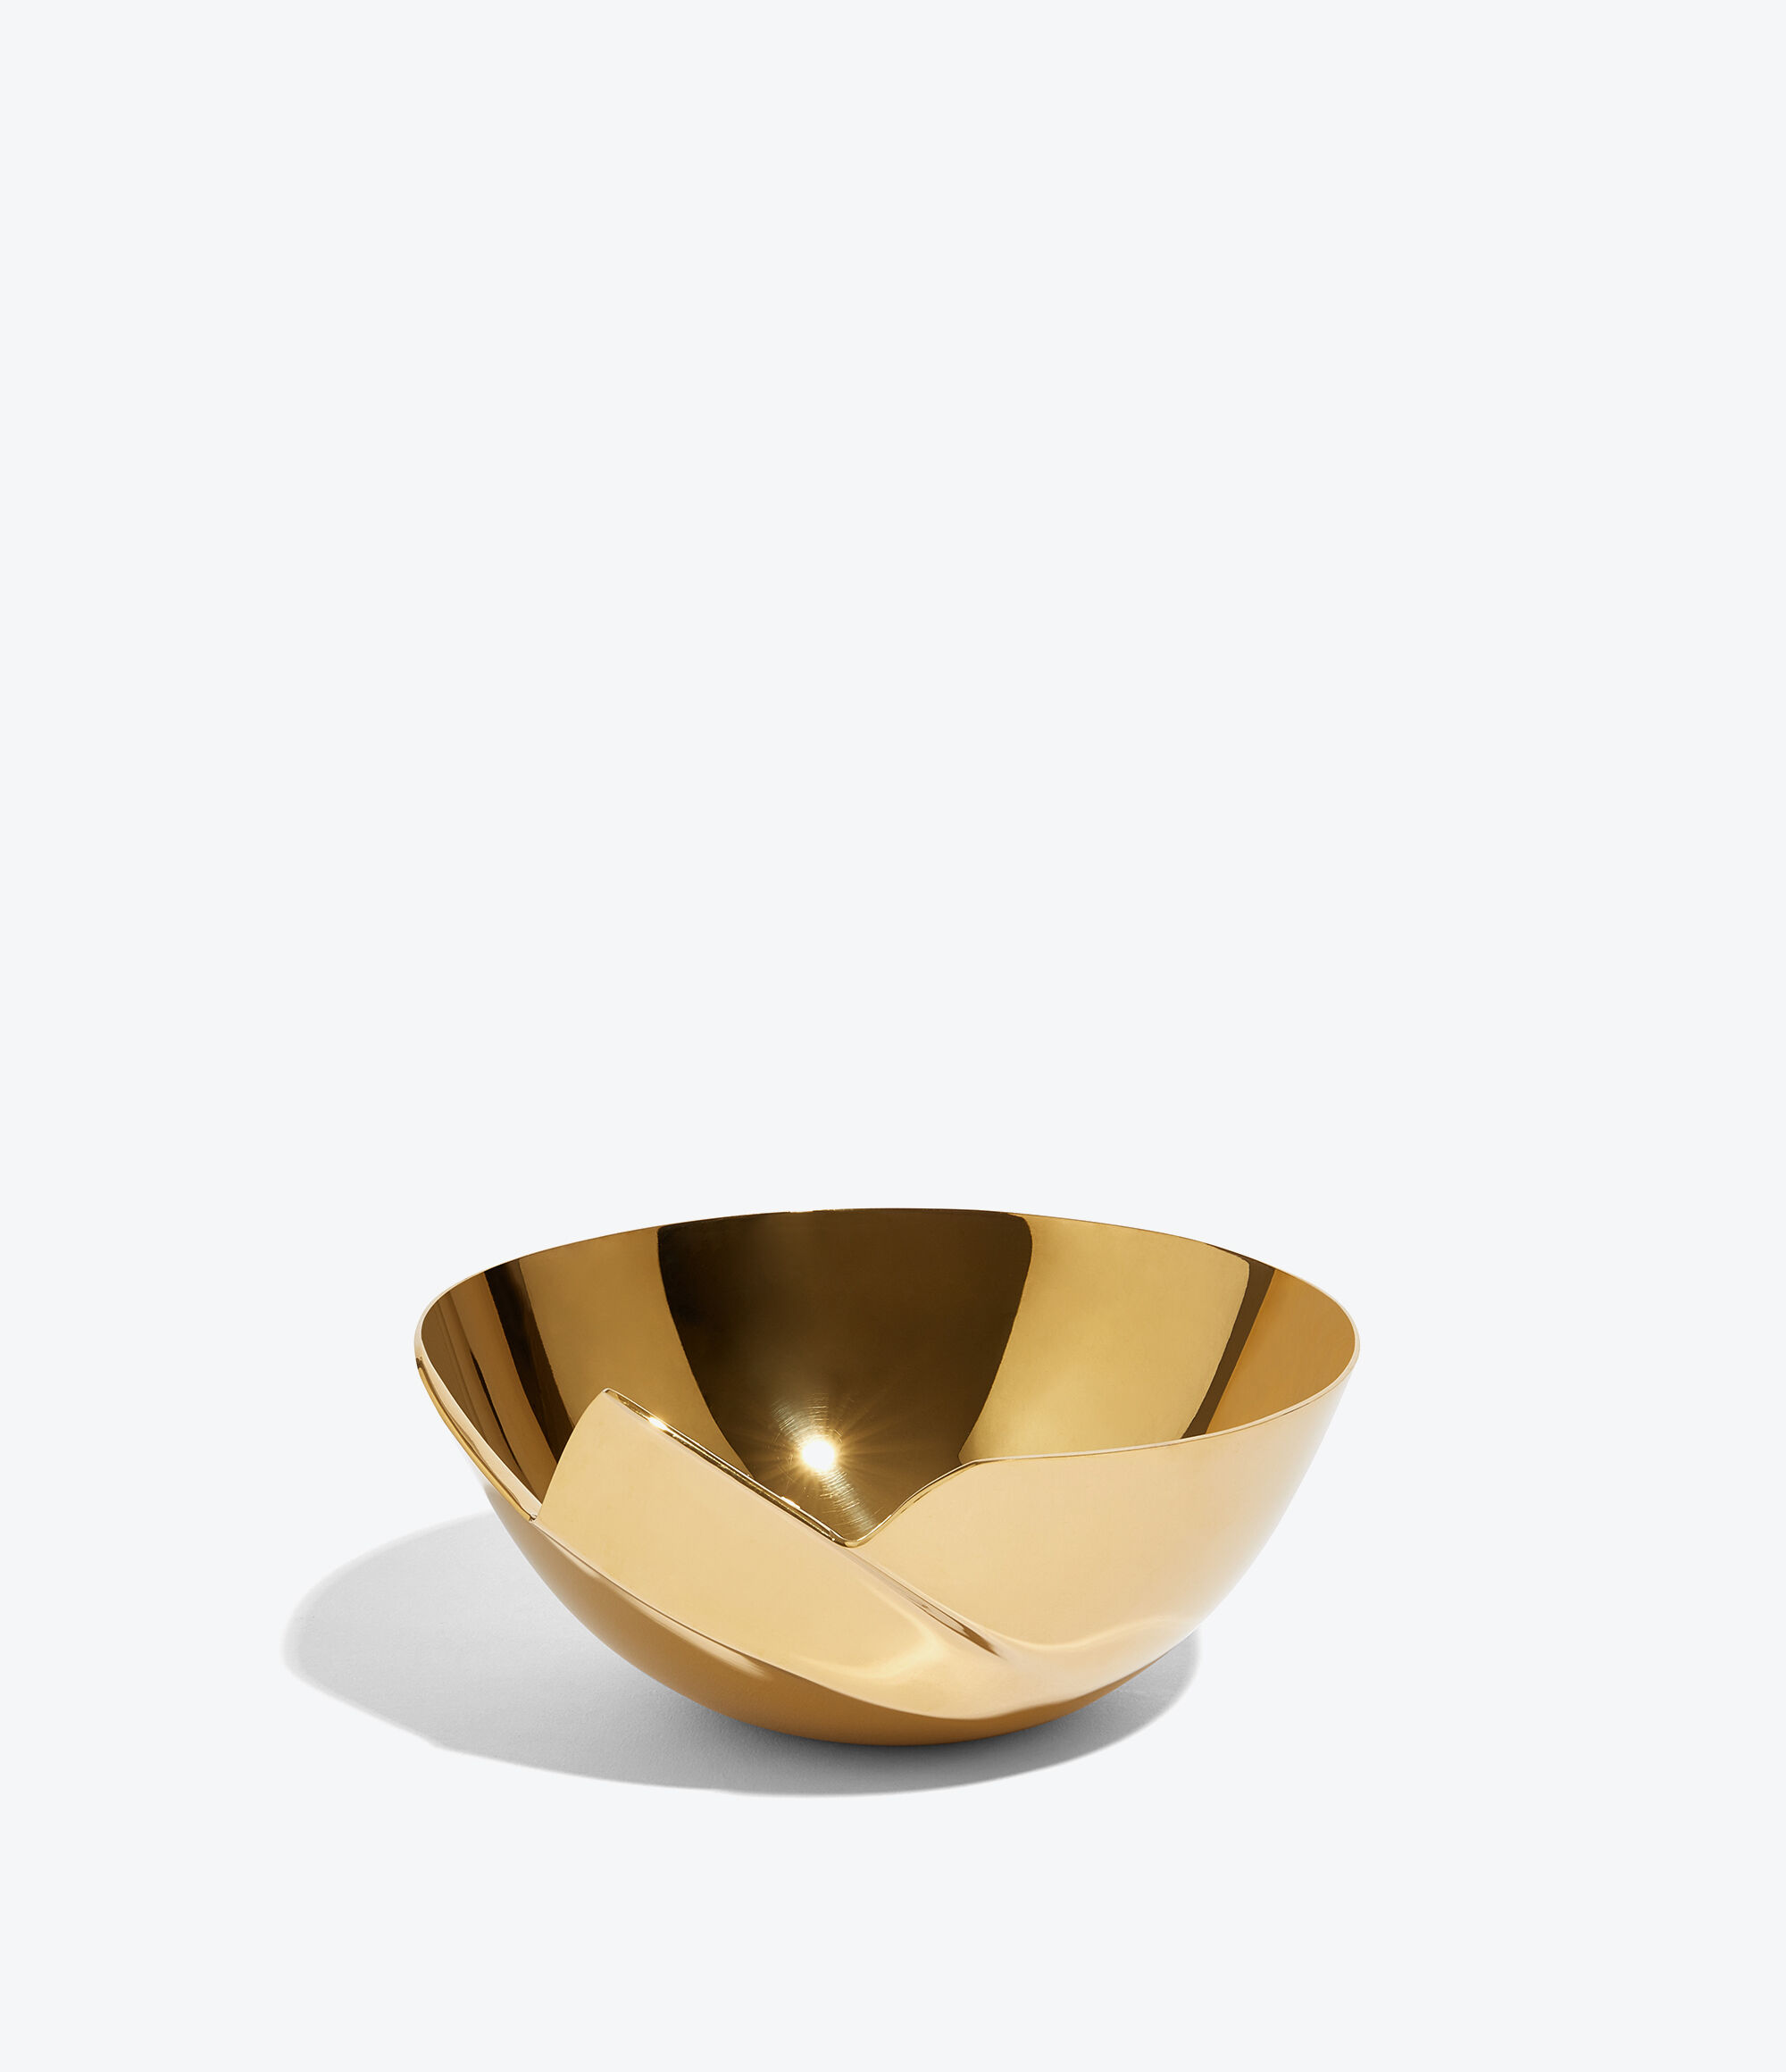 SERENITY BOWL - D 16 cm in GOLD | ZAHA HADID DESIGN®